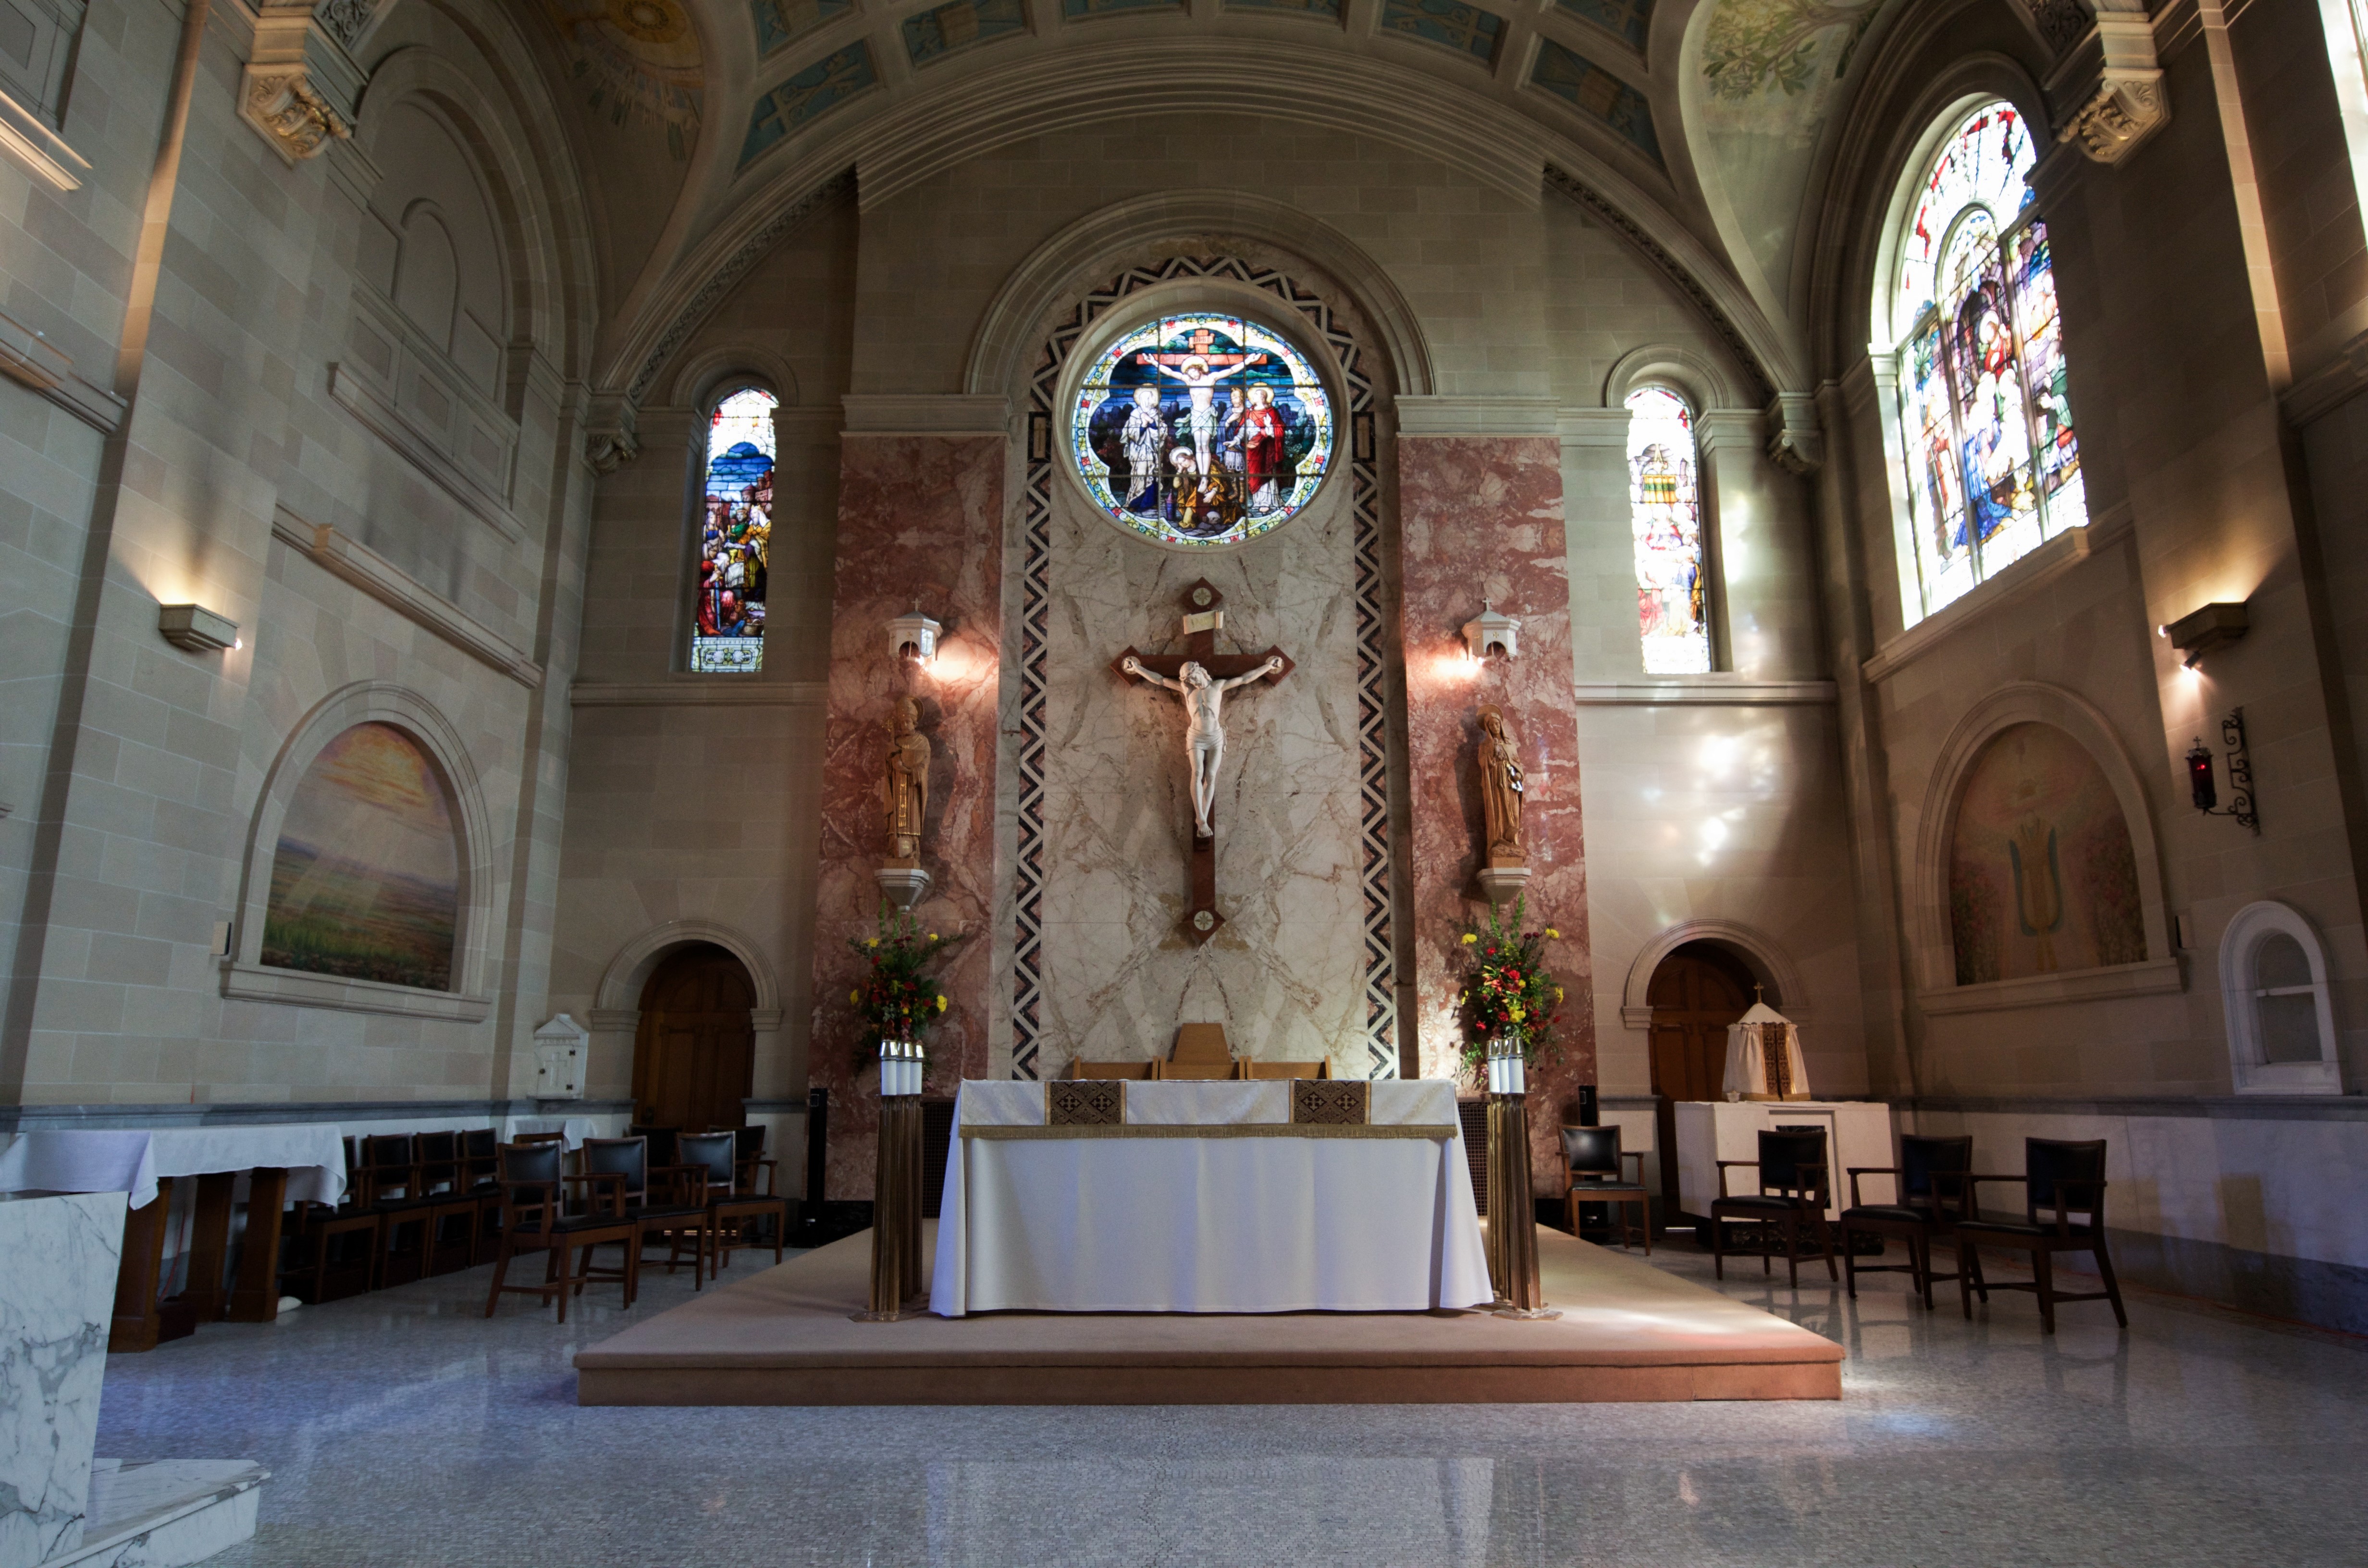 St. Augustine's Chapel